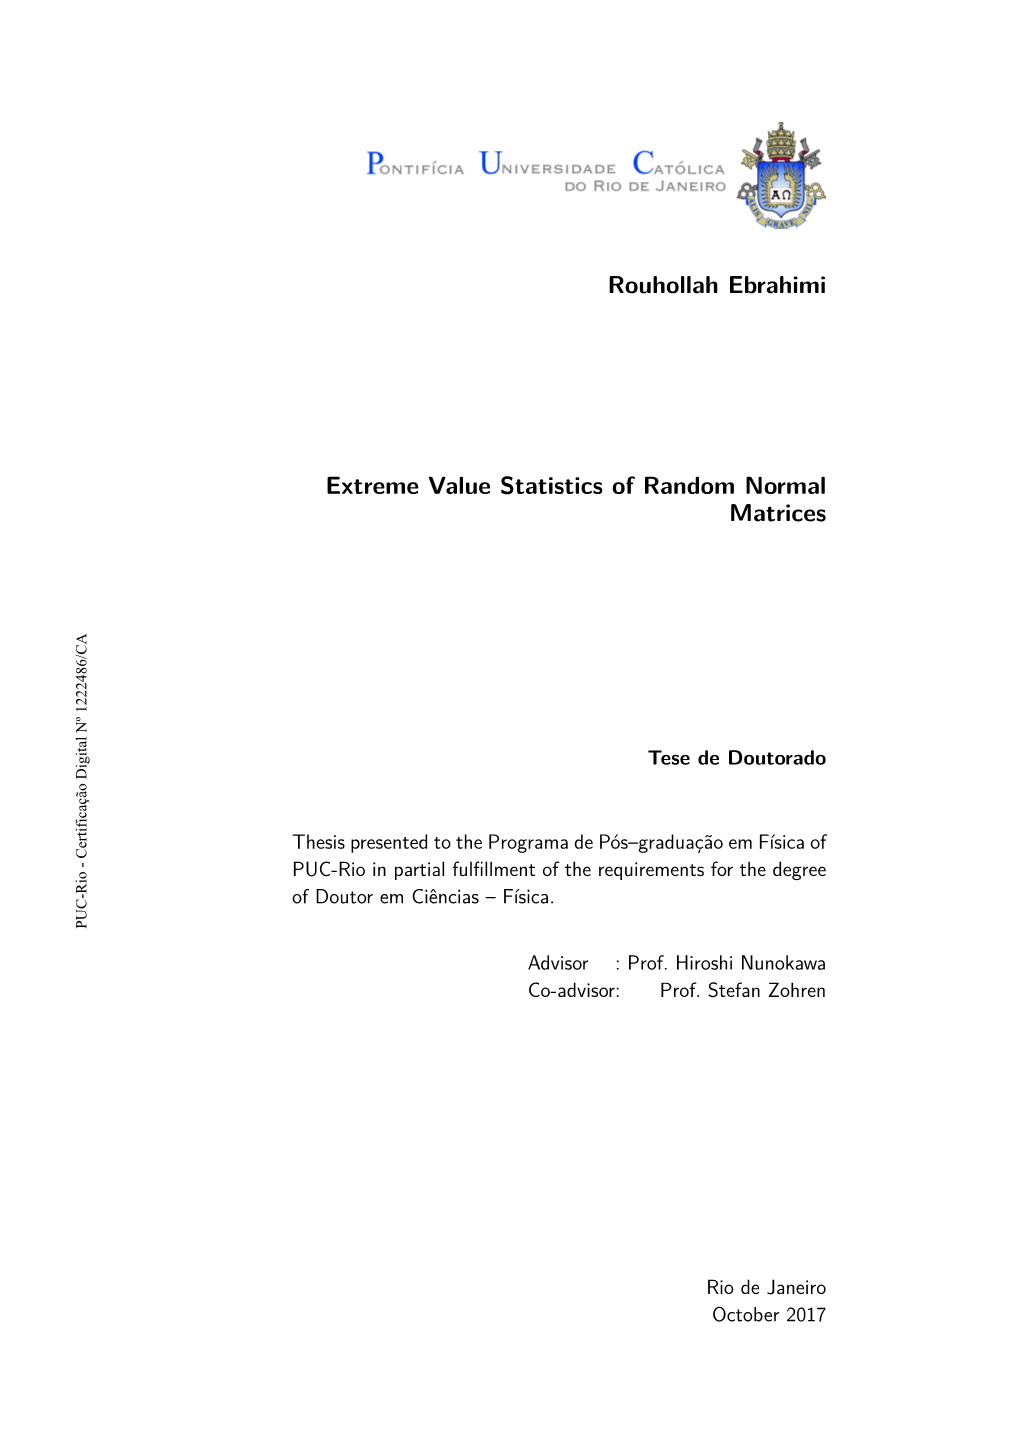 Rouhollah Ebrahimi Extreme Value Statistics of Random Normal Matrices